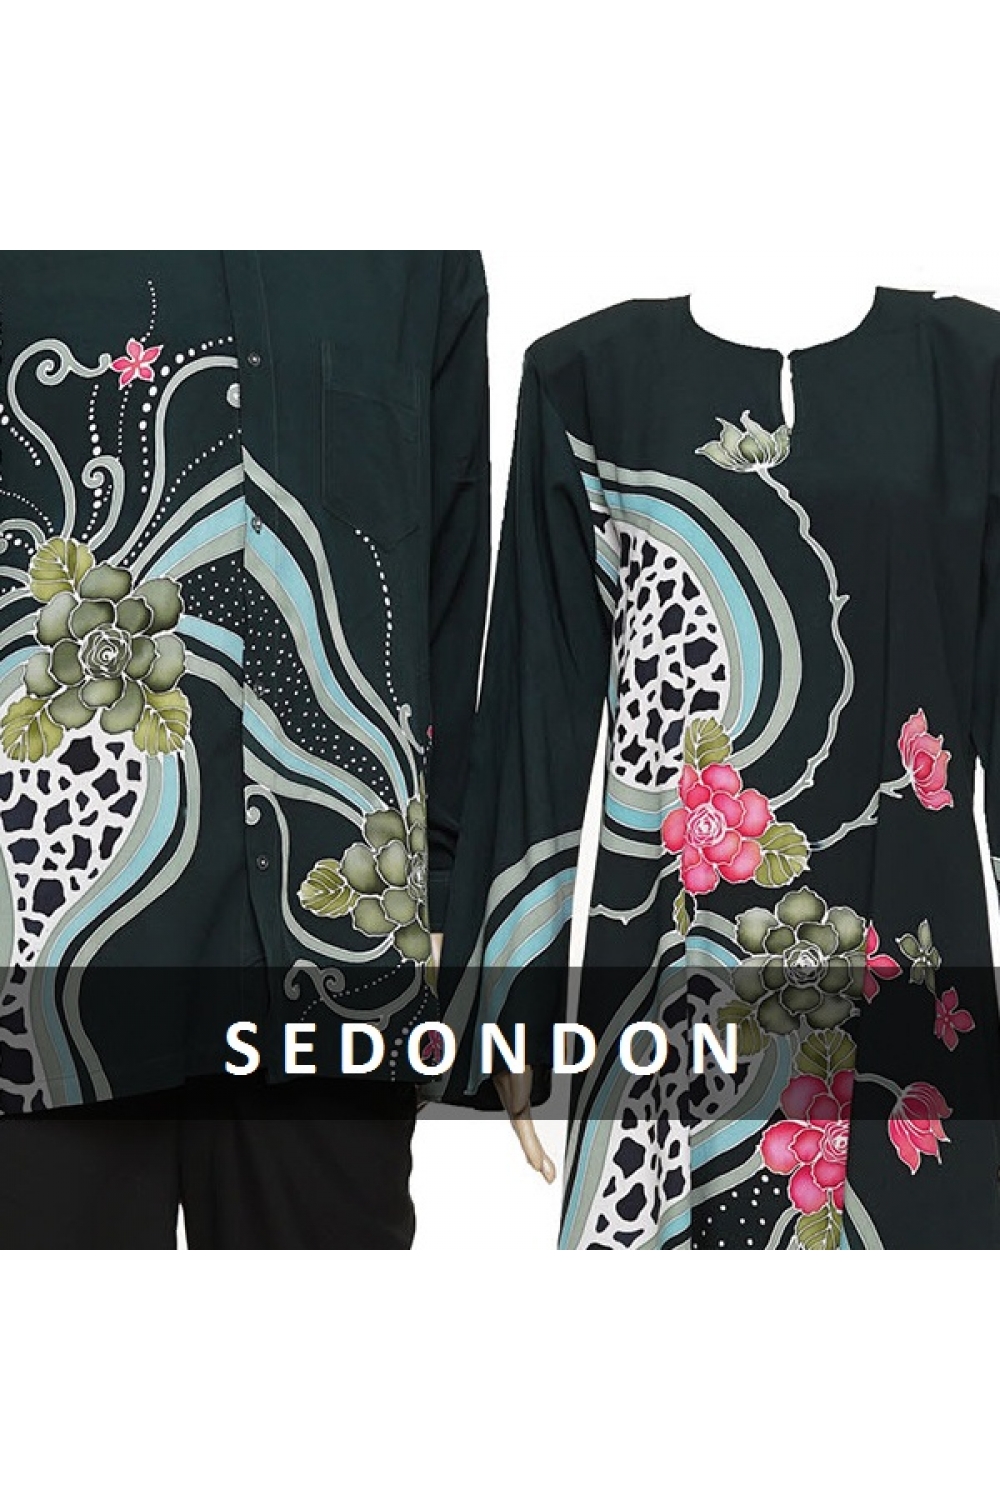 Sedondon/Couple Set